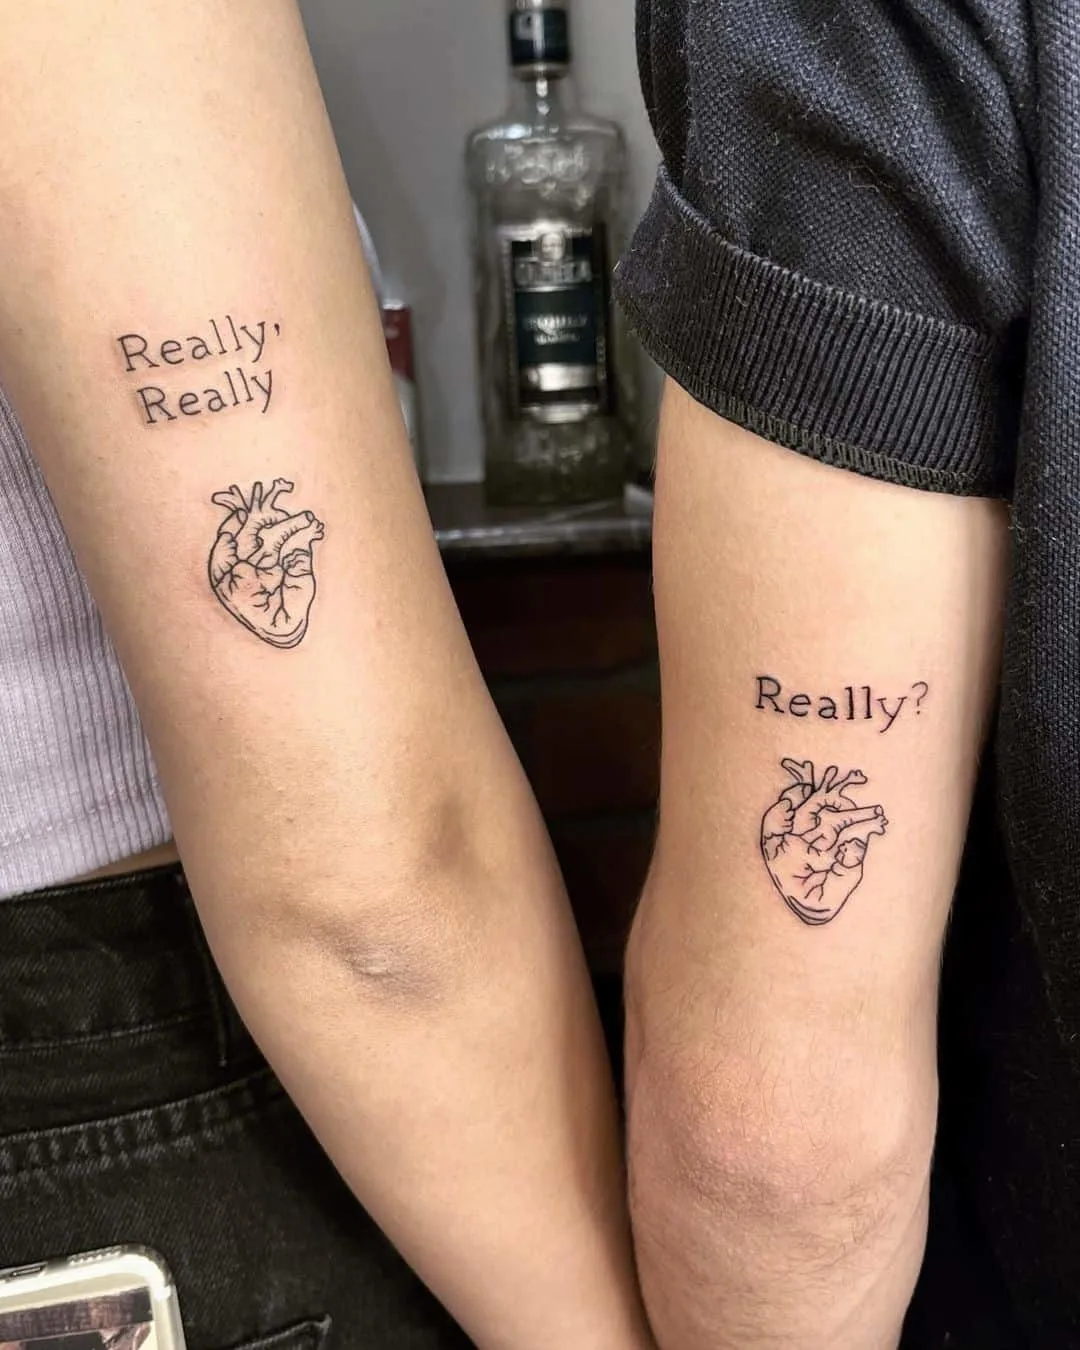 Deep BFF love matching tattoos